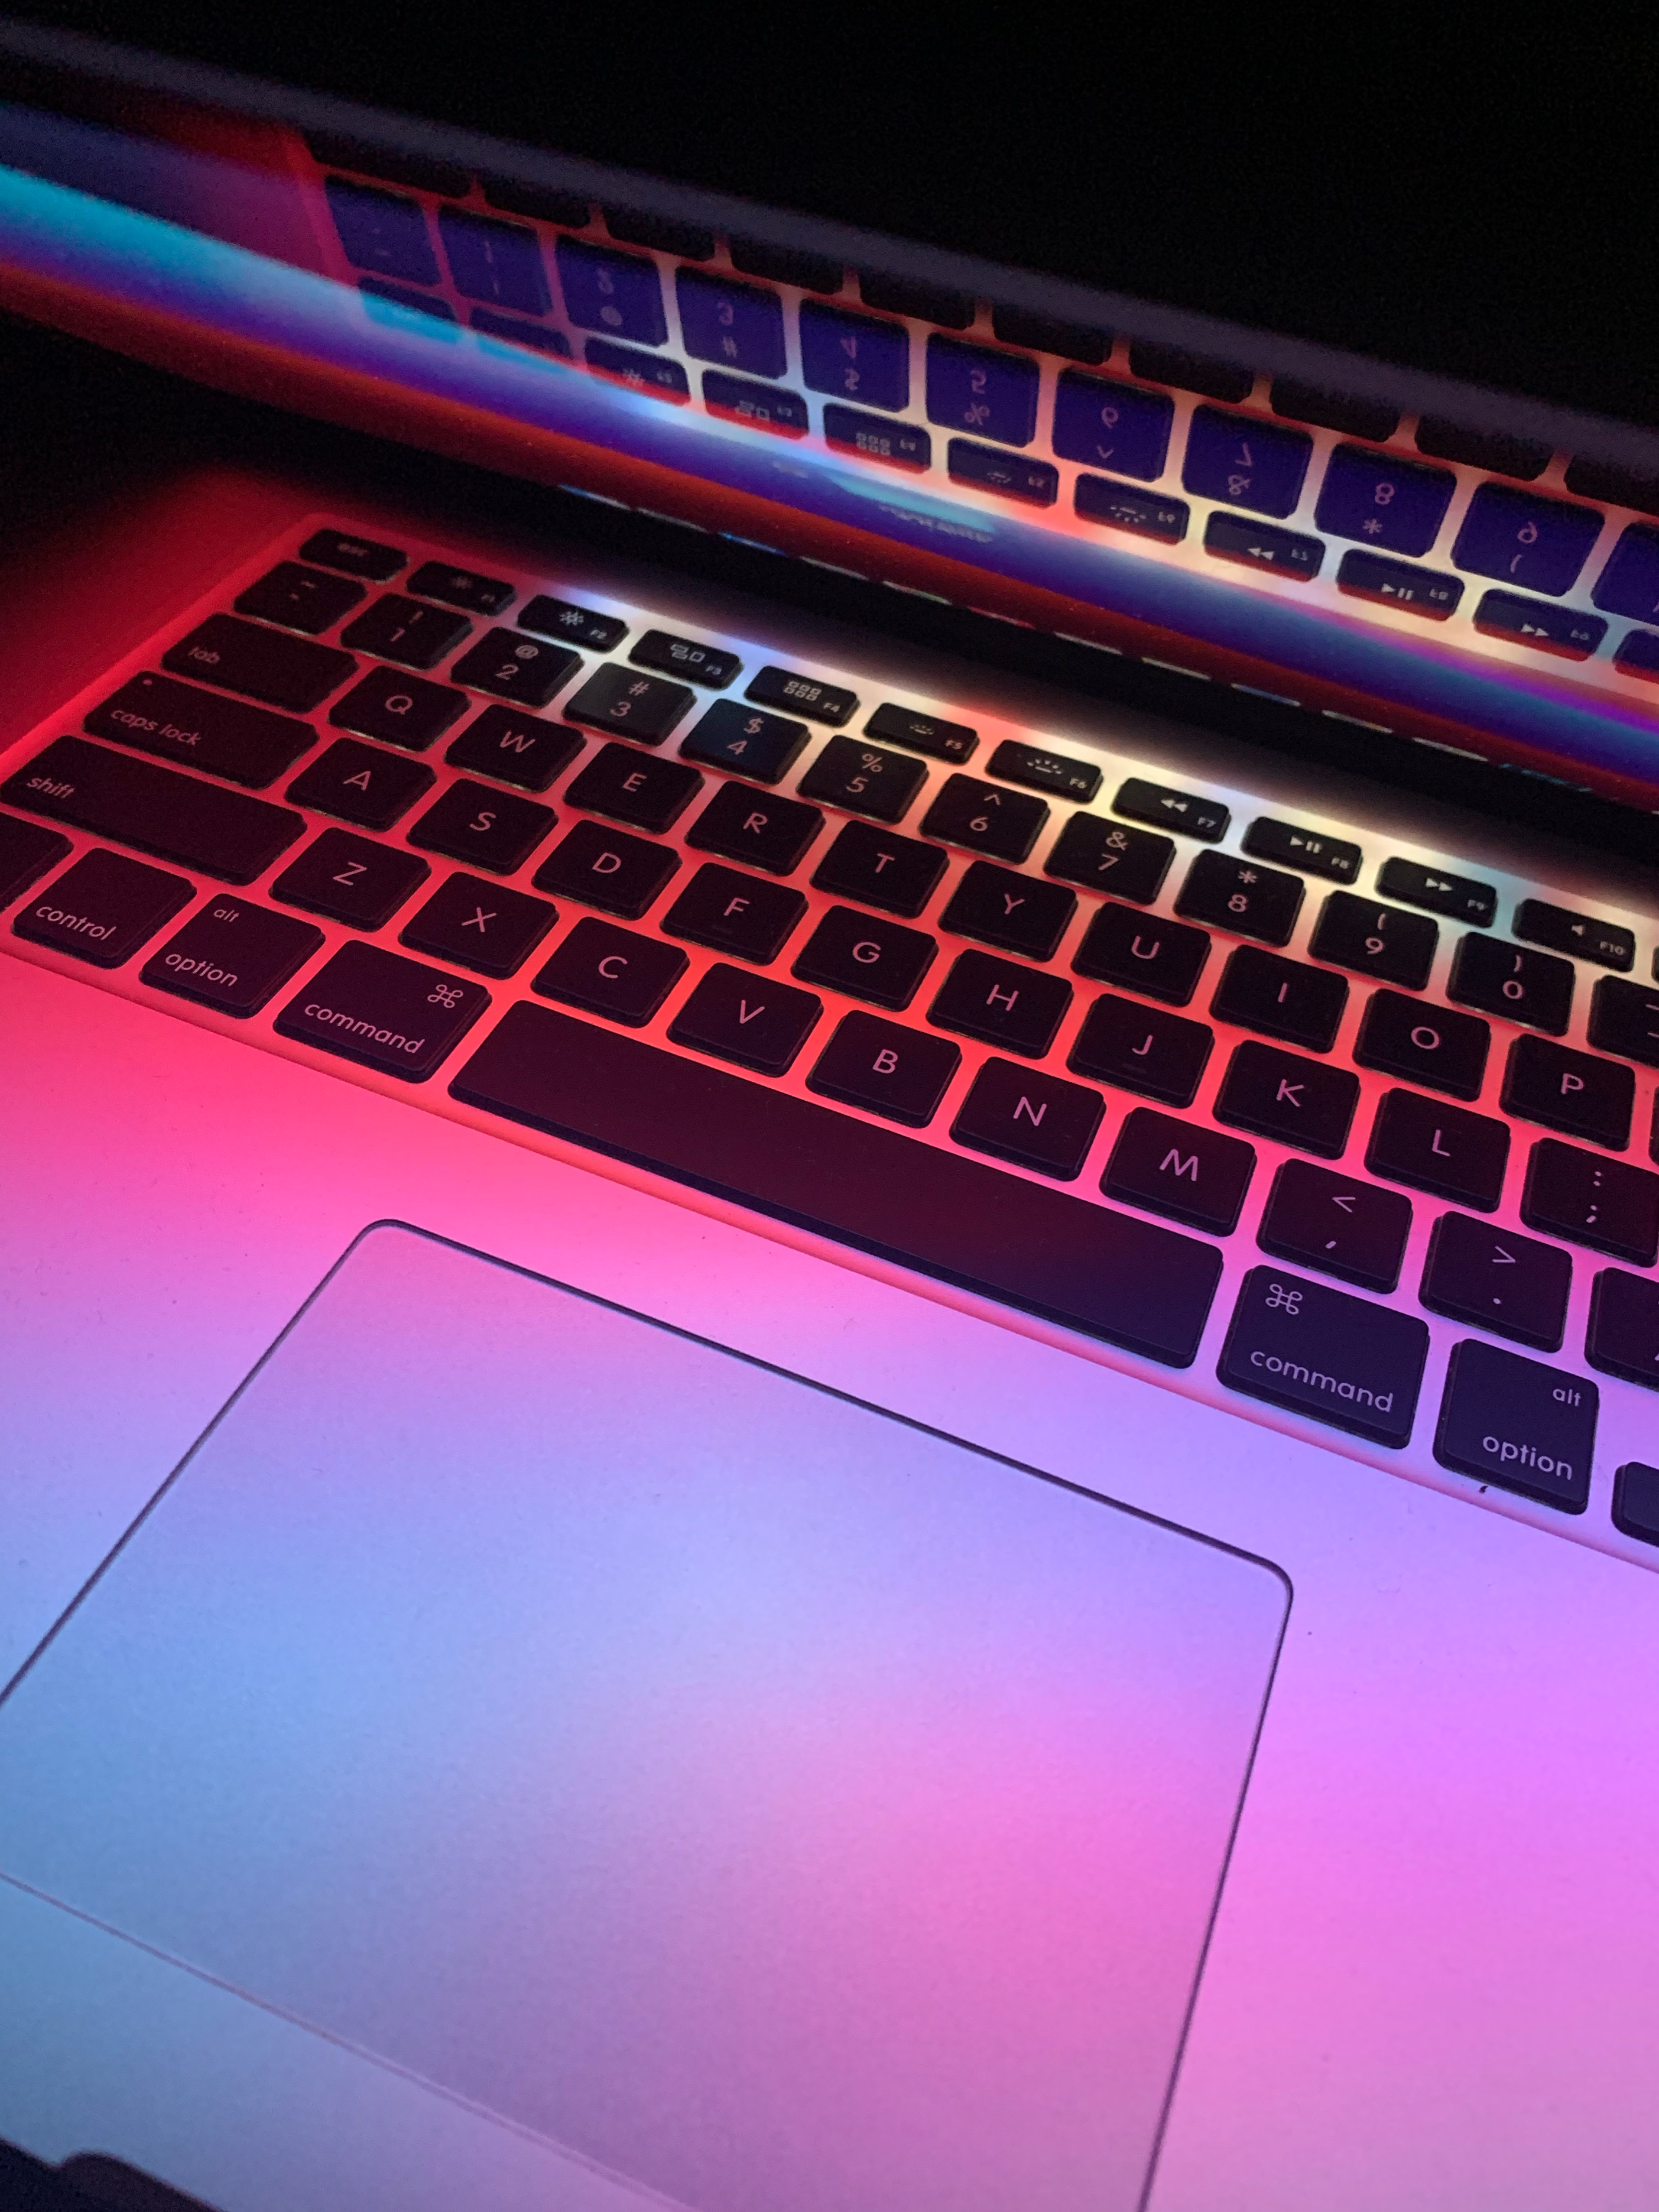 #macbook #lights #night #magenta #keyboard 